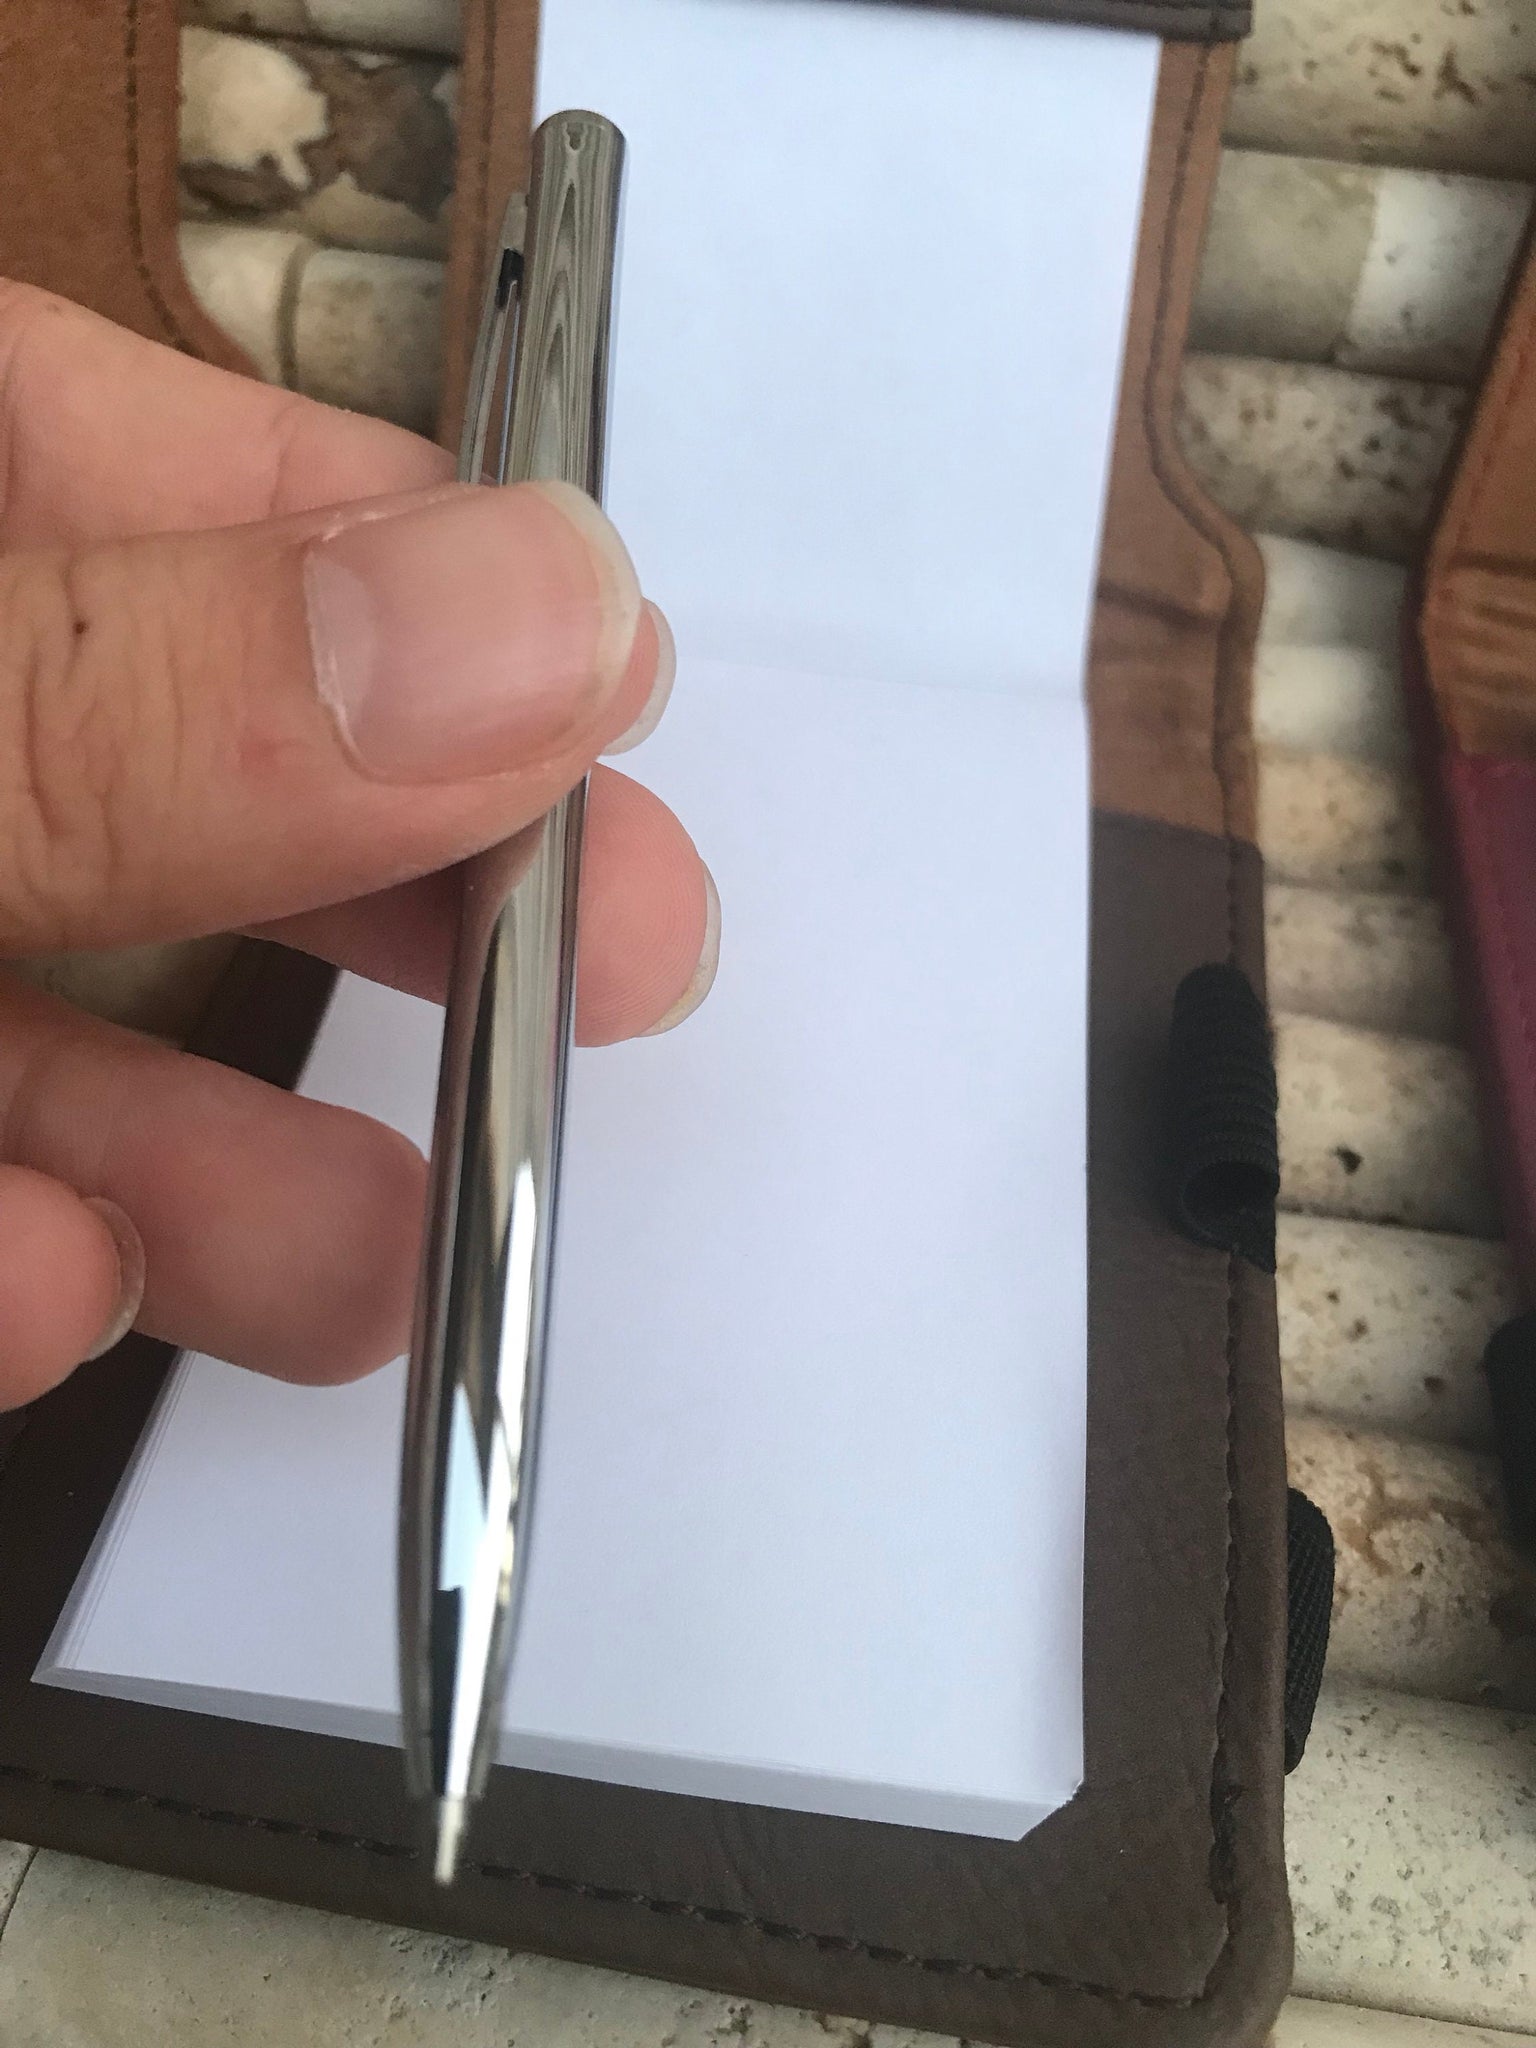 Bulk order of 50 Mini notepad